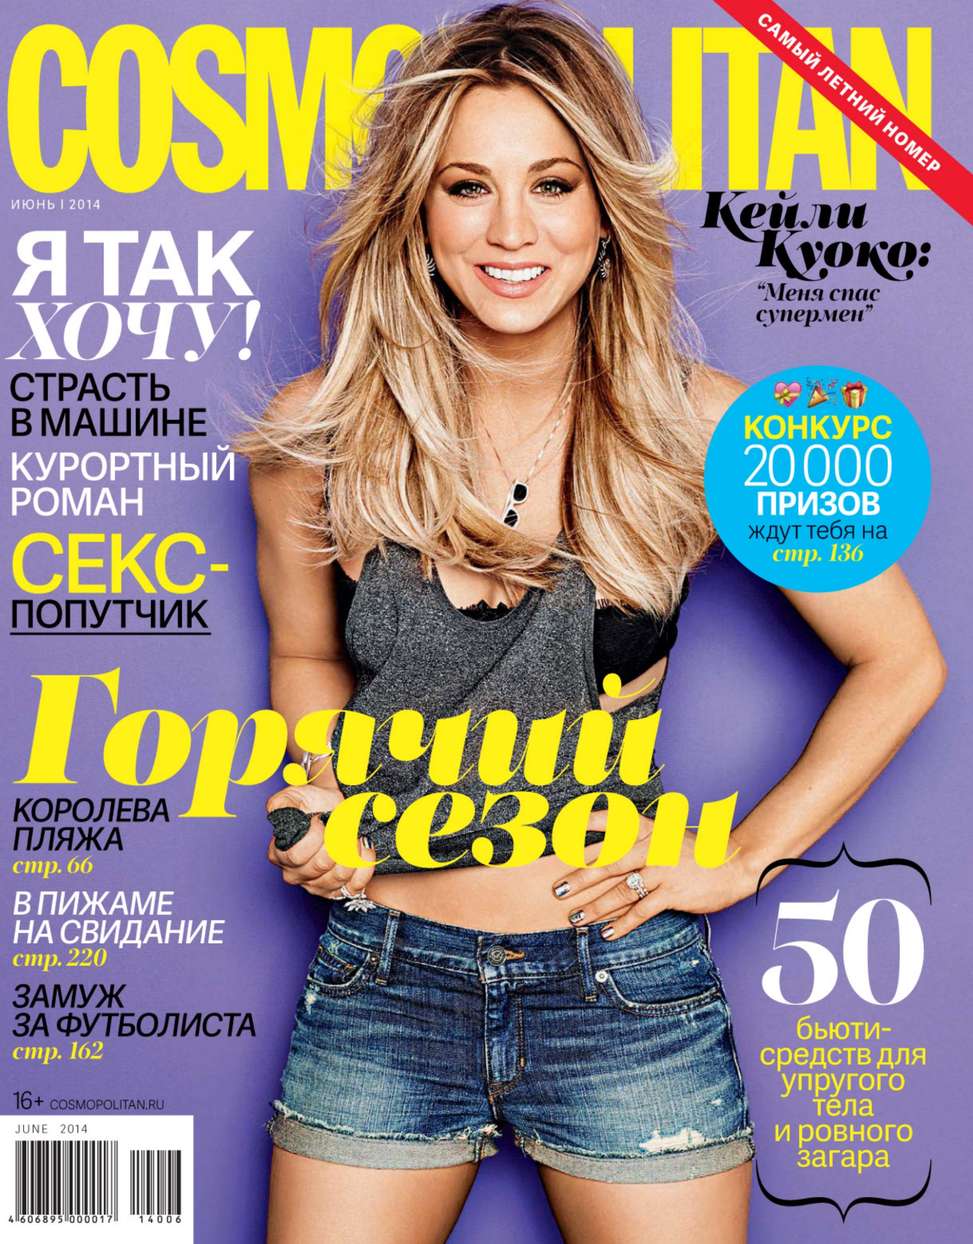 Cosmopolitan 06-2014